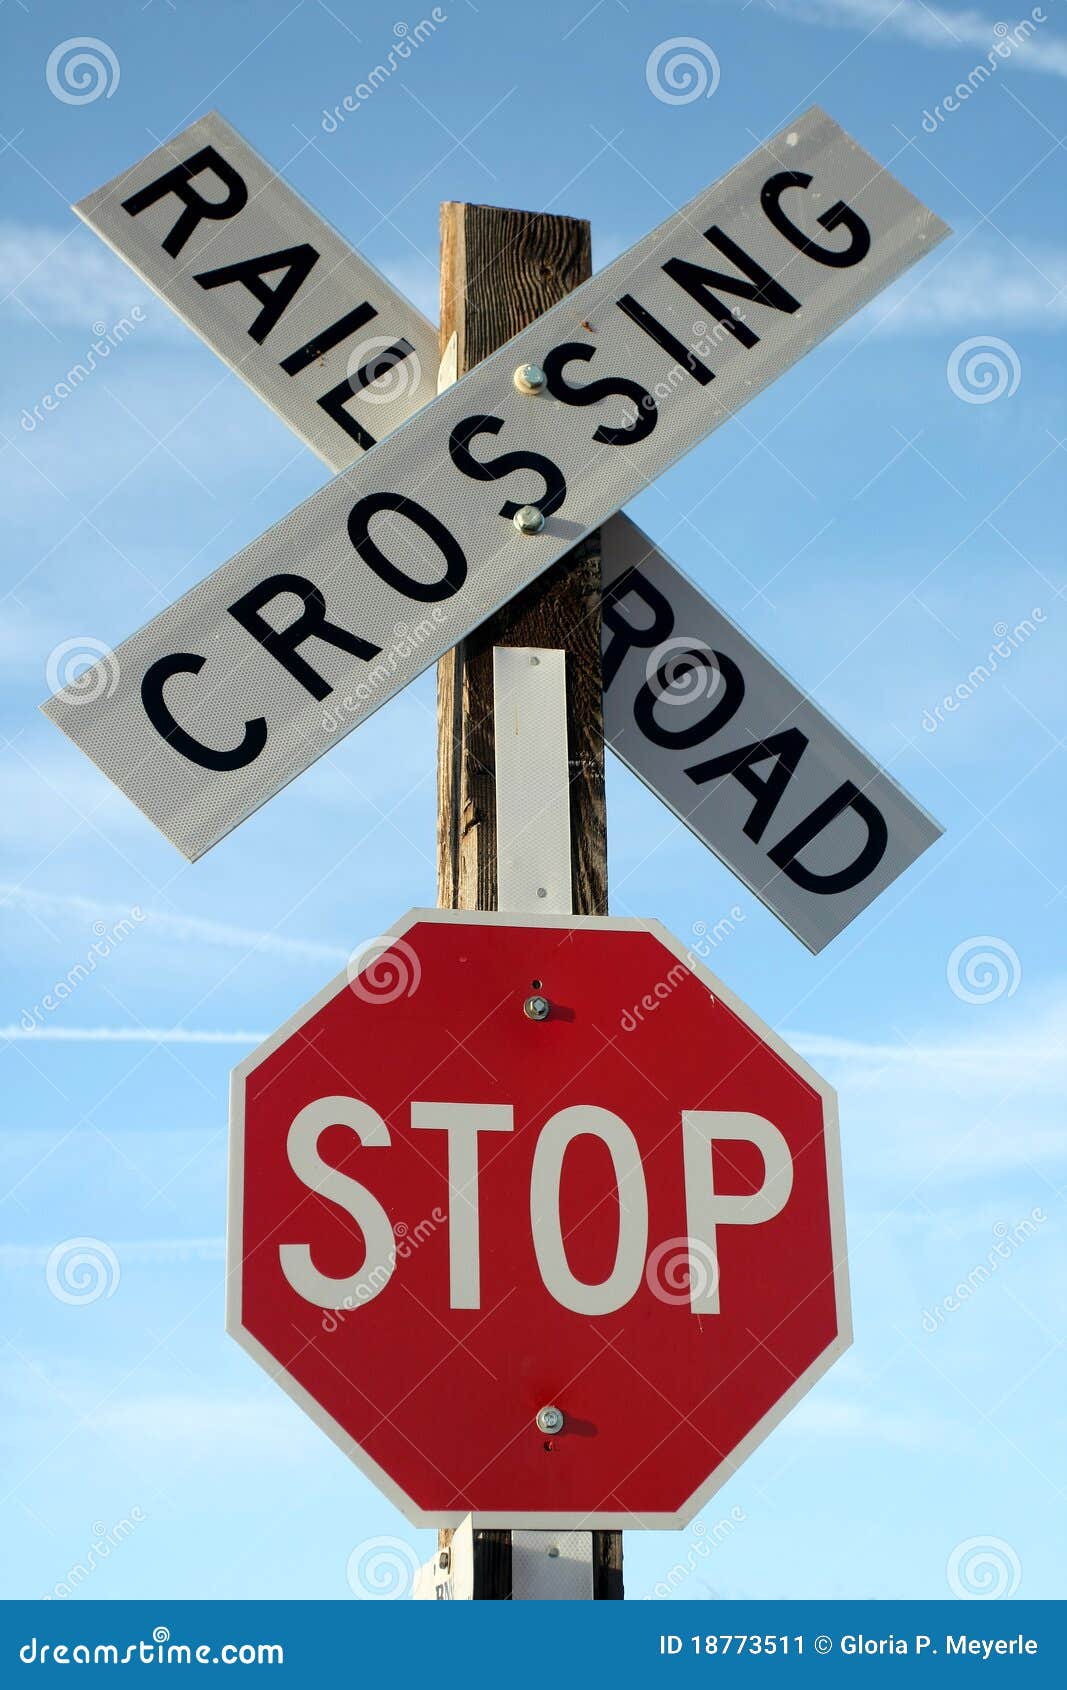 railroad crossing stop sign